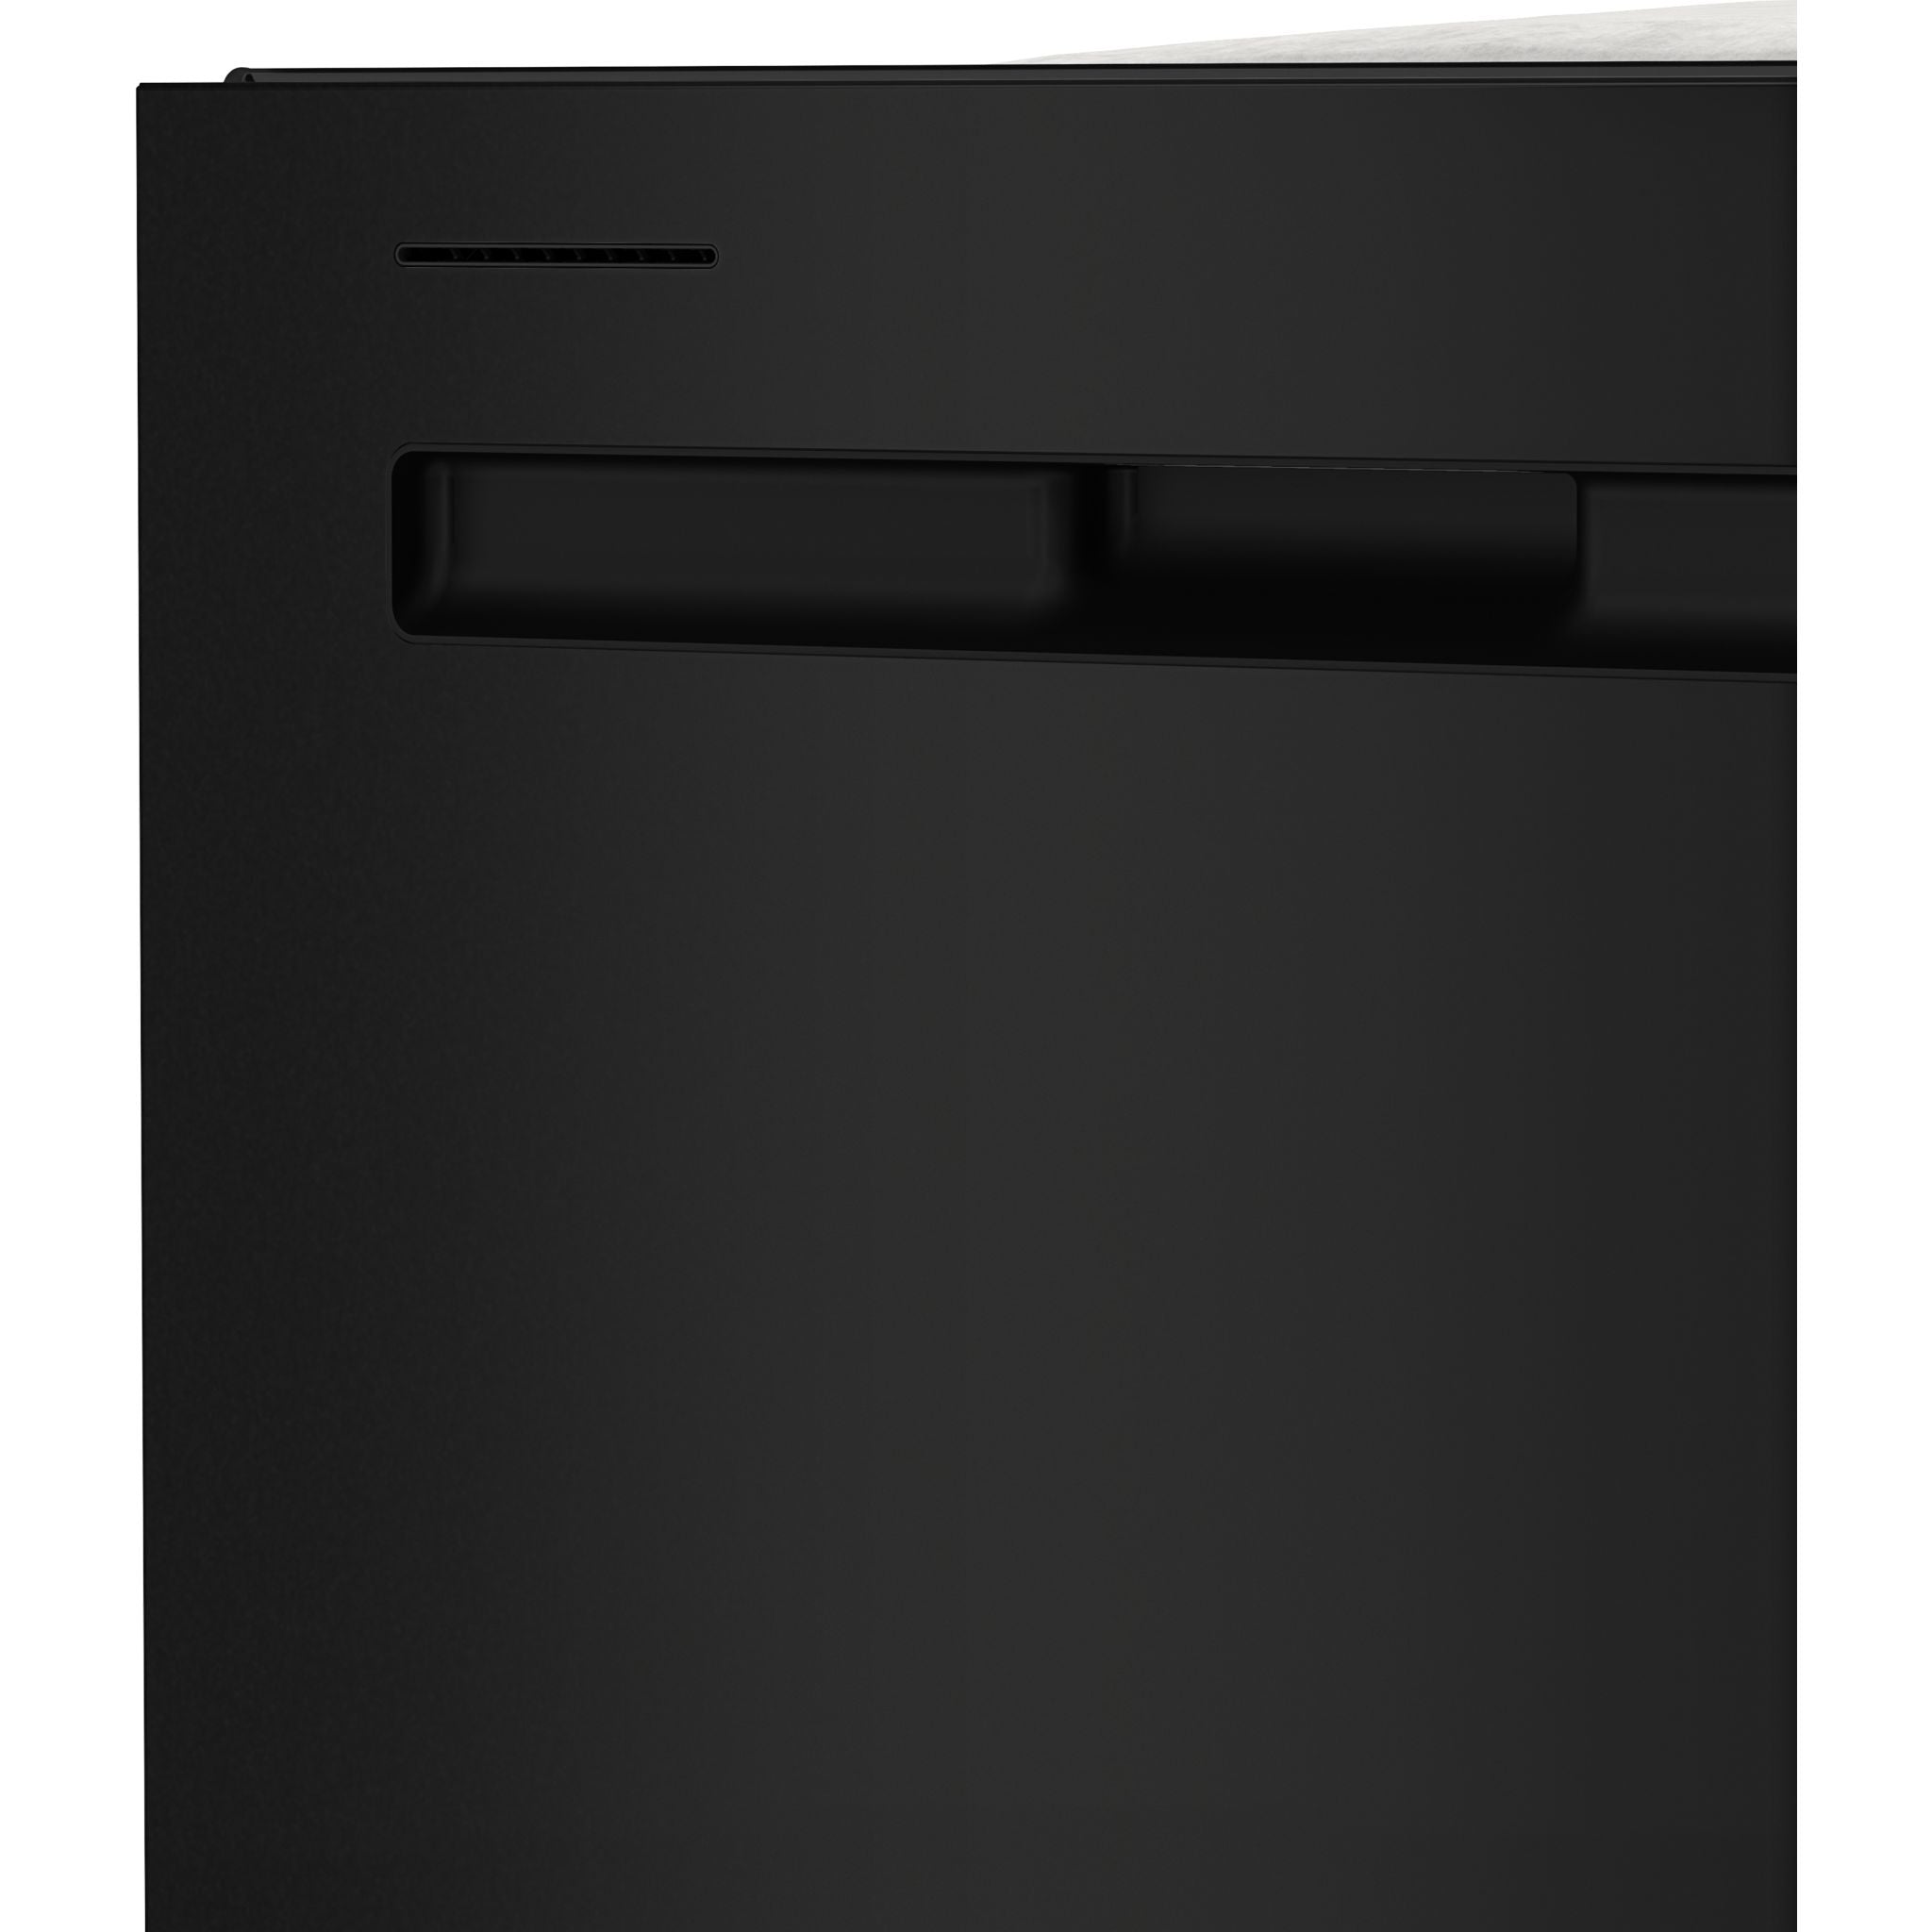 Maytag, Maytag Dishwasher Stainless Steel Tub (MDB8959SKB) - Black